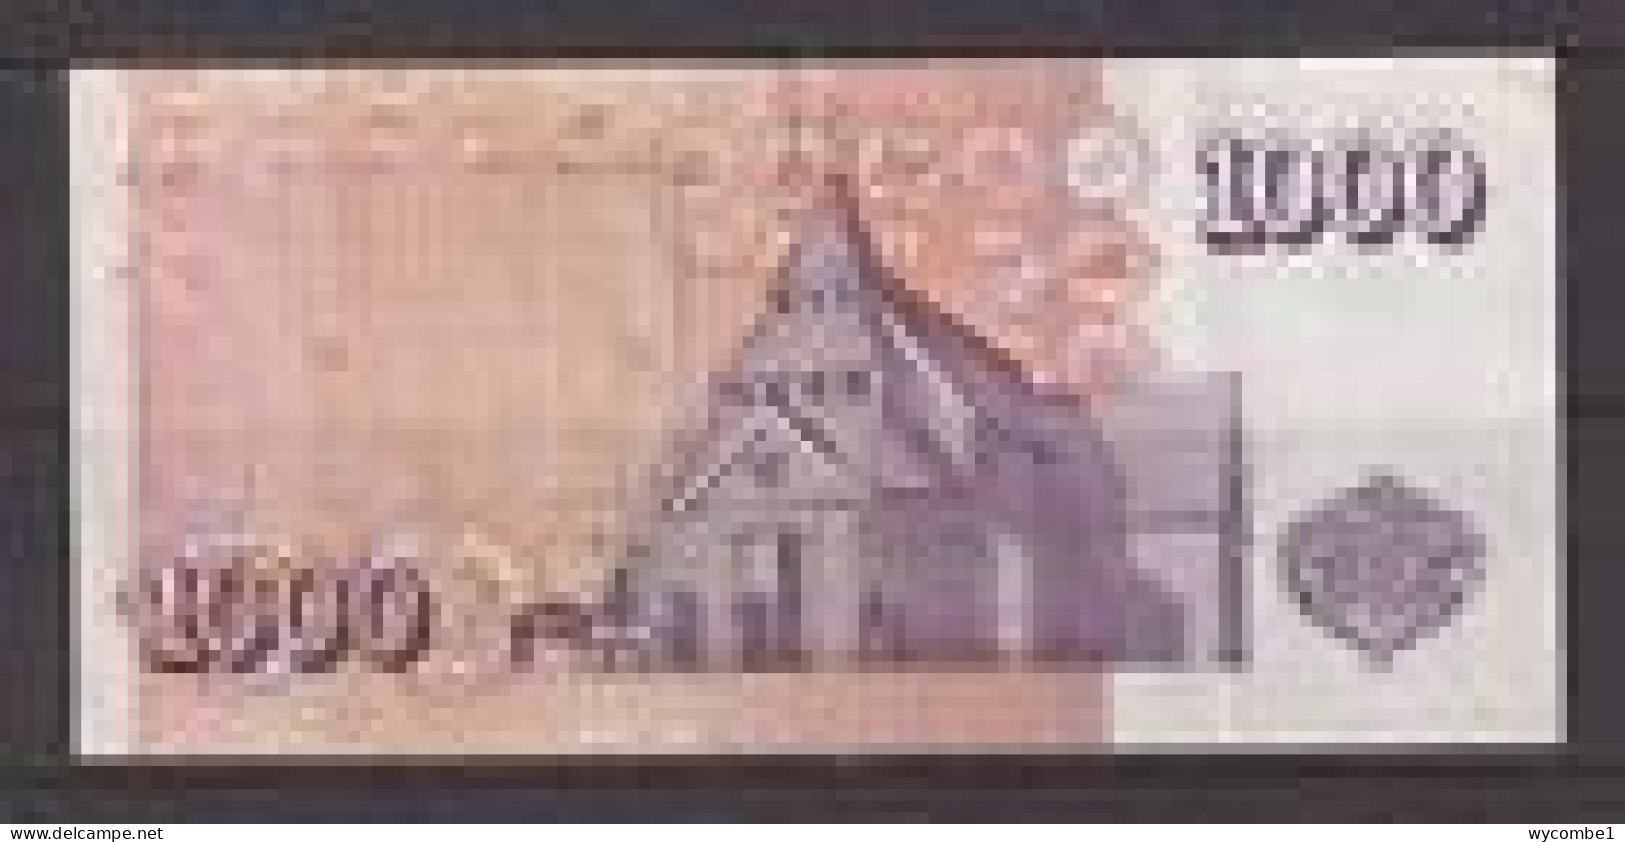 ICELAND - 2001 1000 Kronur Circulated Banknote - Island